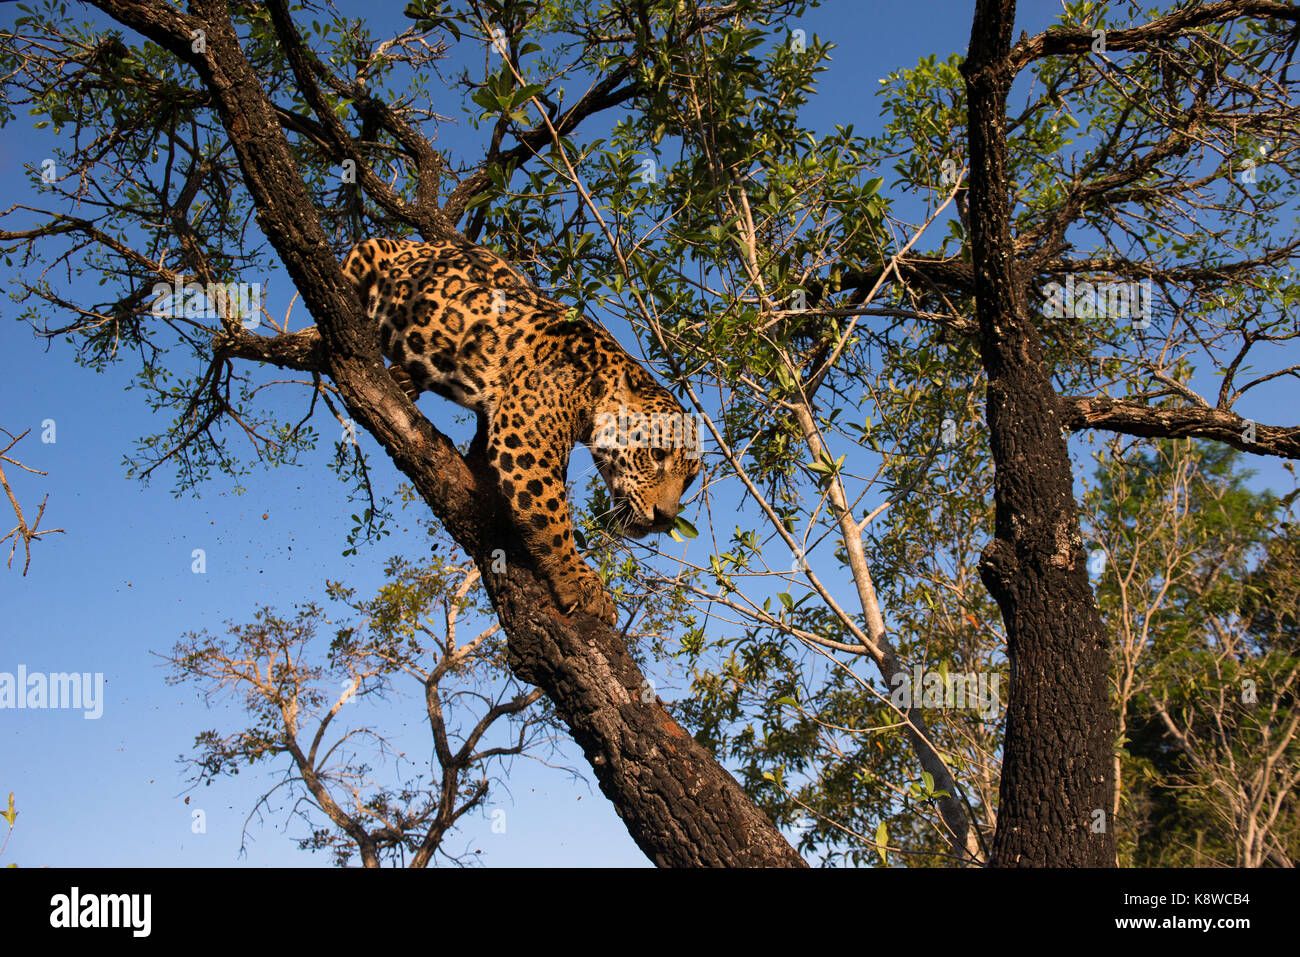 Jaguar on a tree in Central Brazil Stock Photo